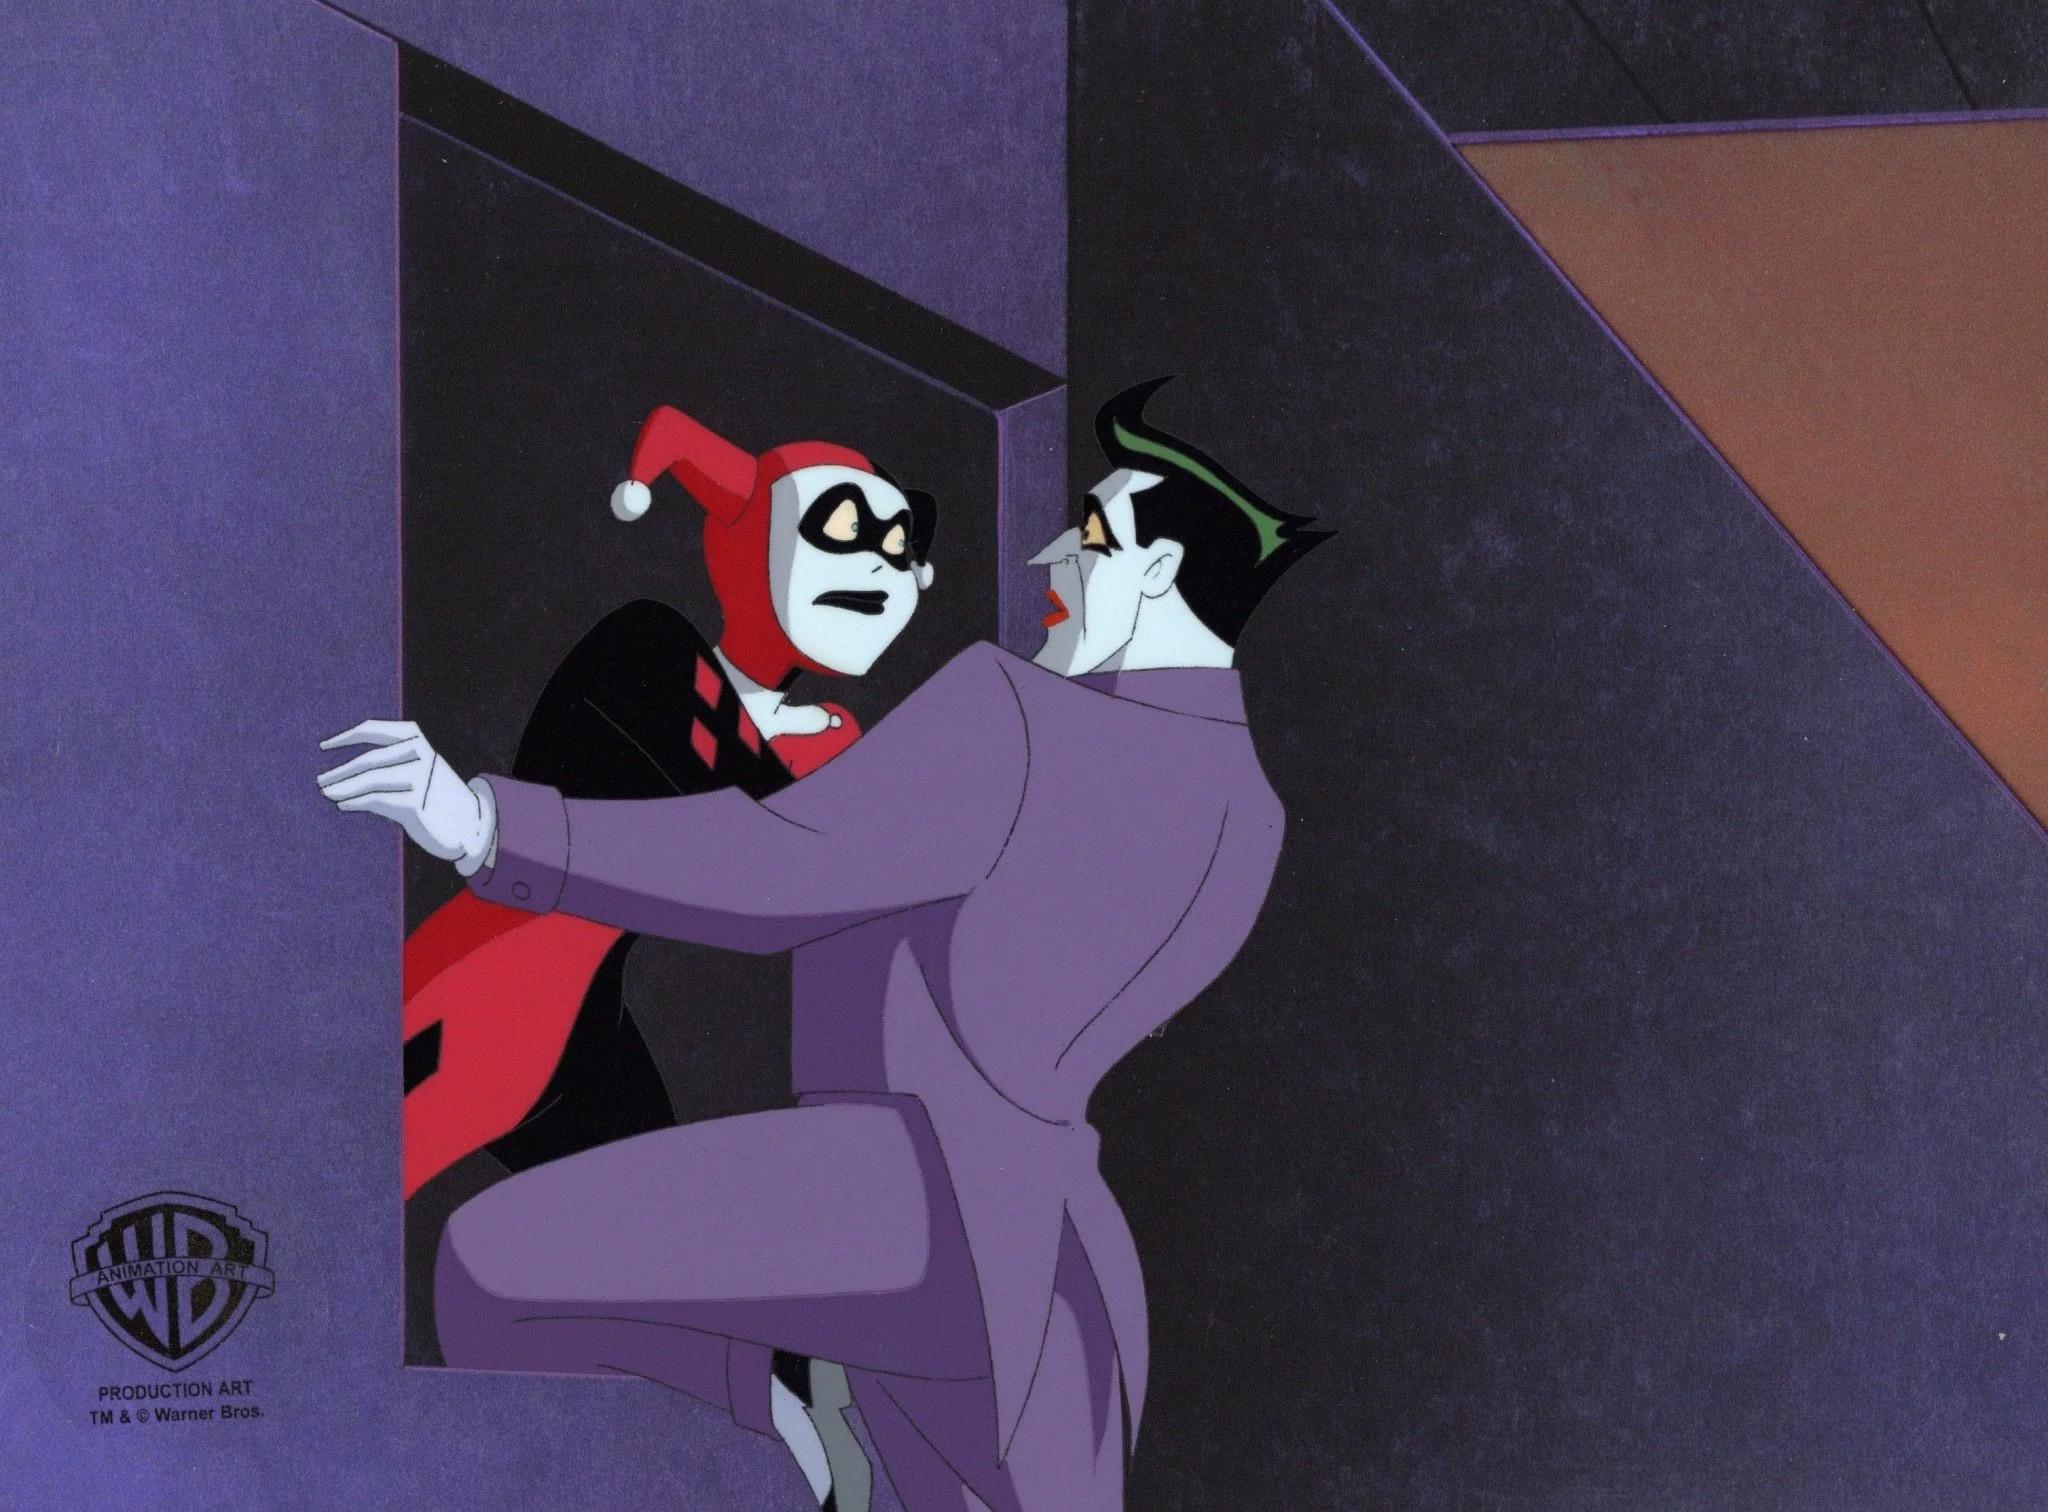 Batman The Animated Series Original Production Cel: Joker and Harley - Art by DC Comics Studio Artists